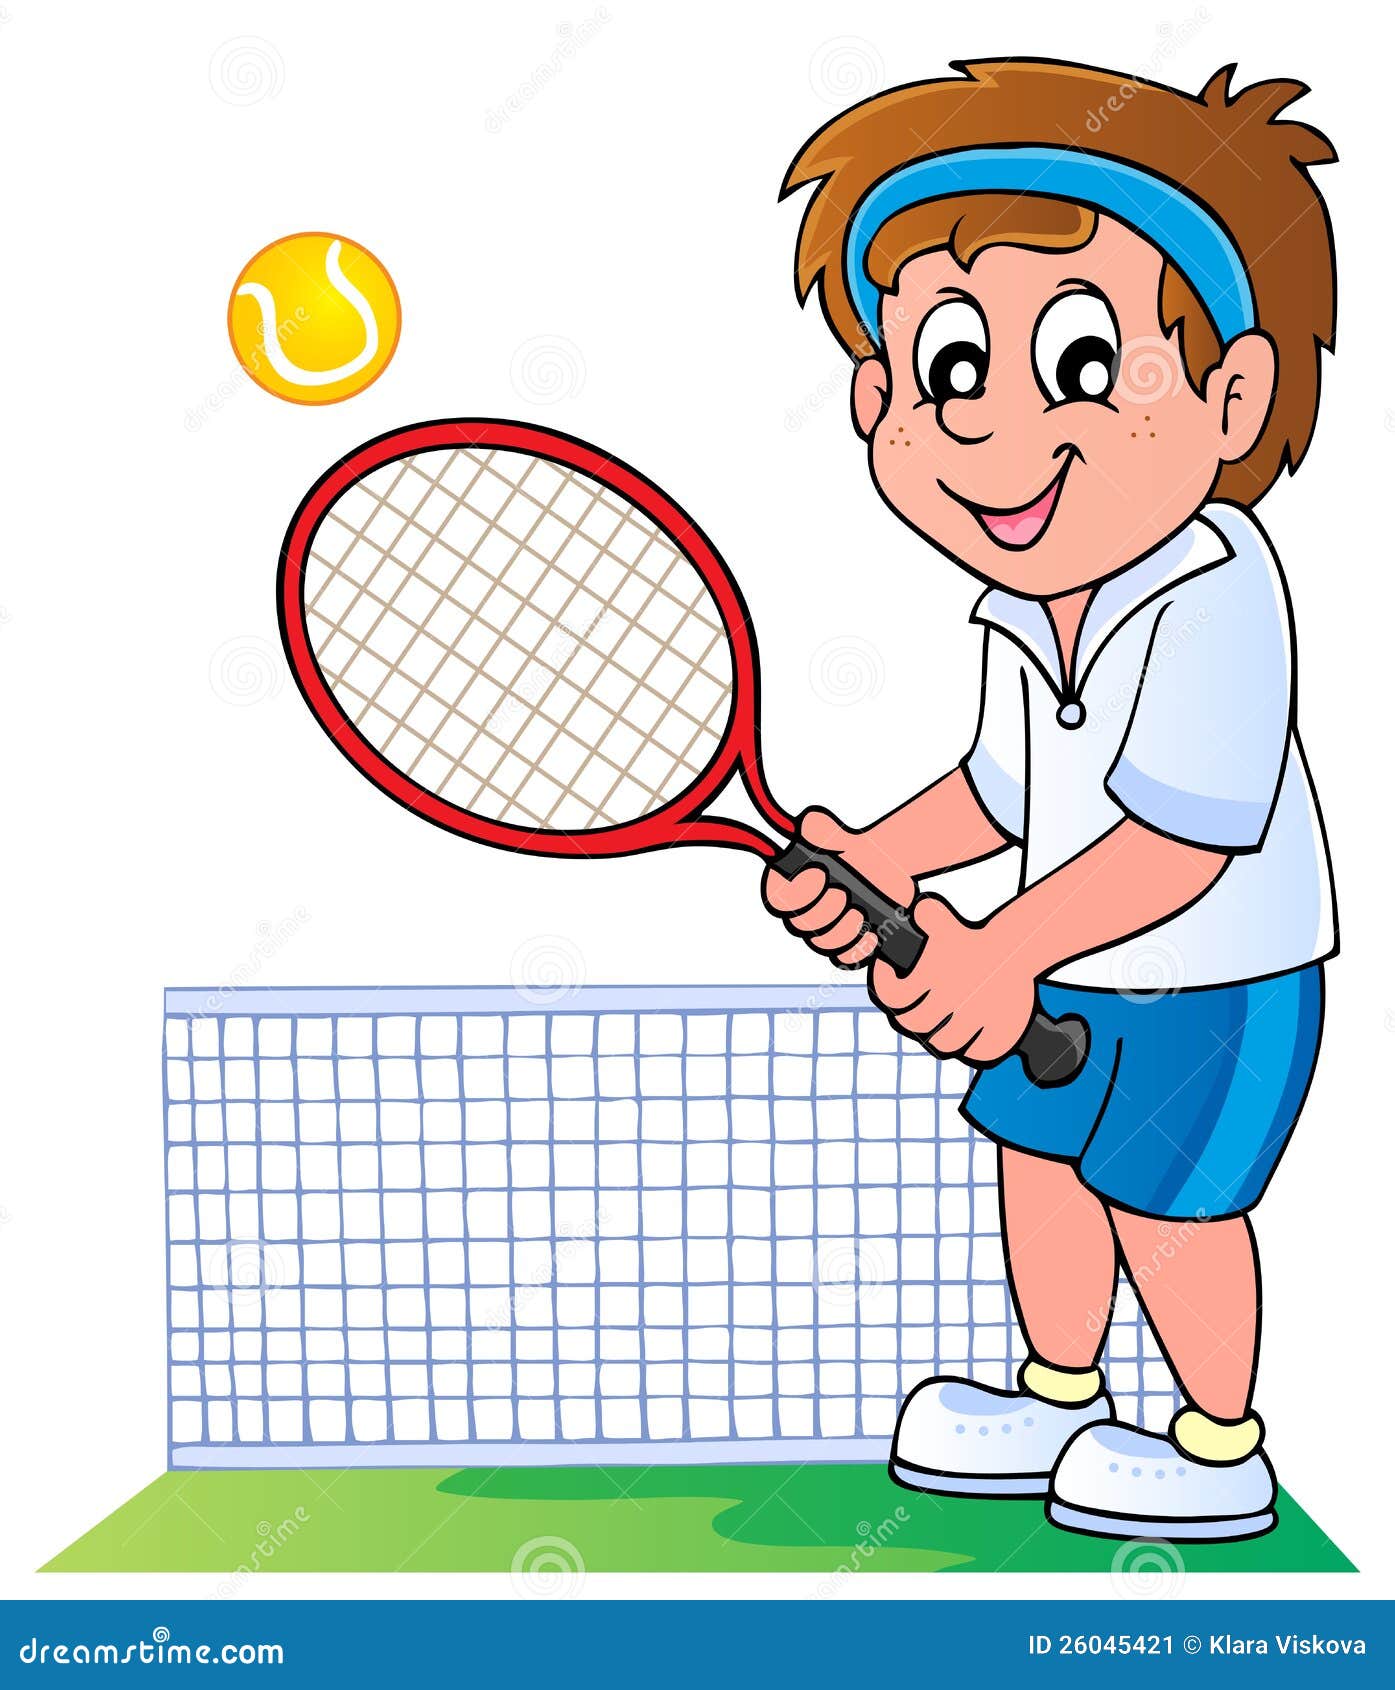 Cartoon tennis player stock vector. Illustration of hold - 26045421